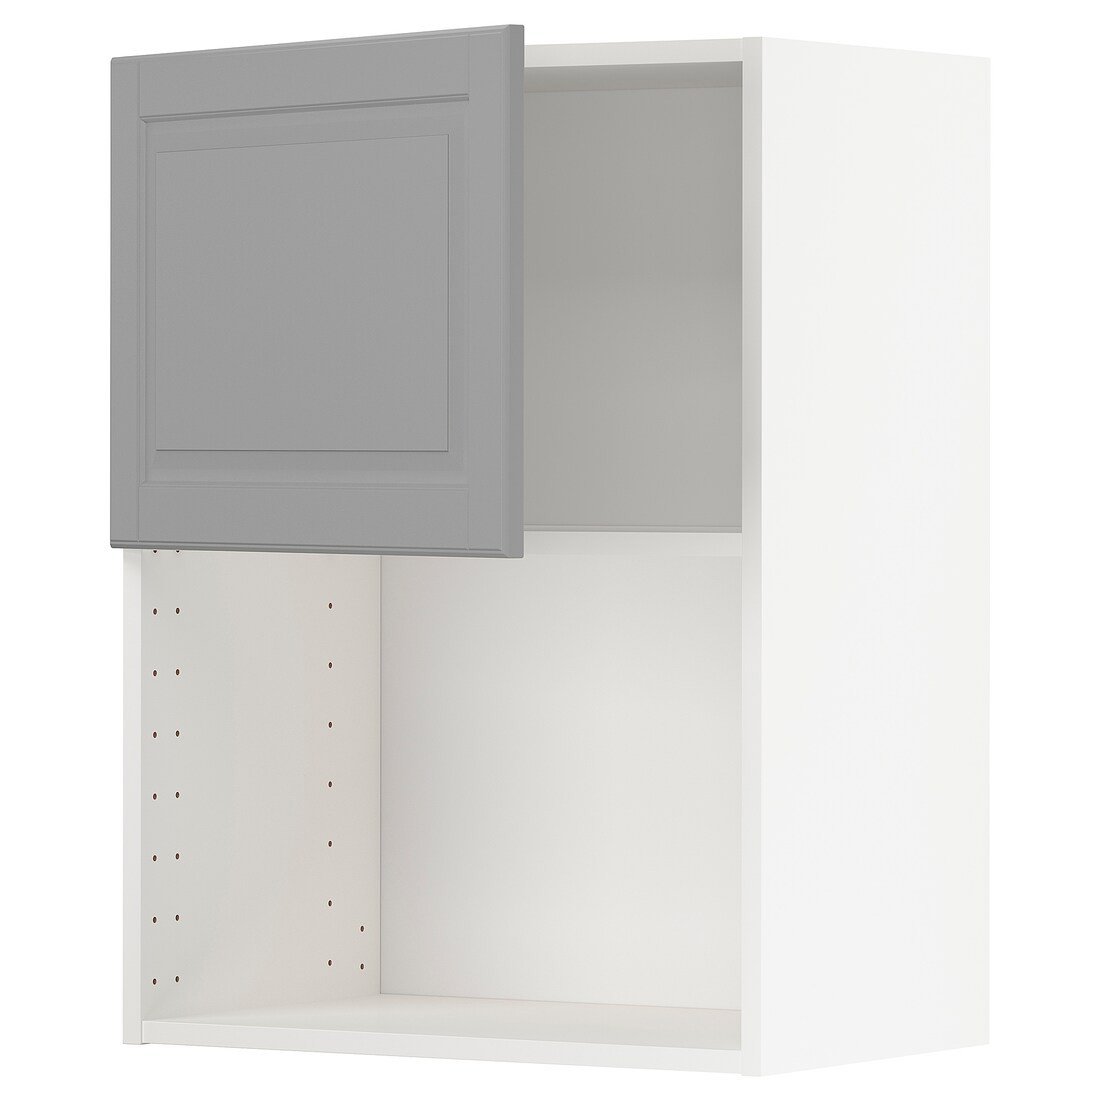 IKEA METOD МЕТОД Навесной шкаф для СВЧ-печи, белый / Bodbyn серый, 60x80 см 99466127 | 994.661.27